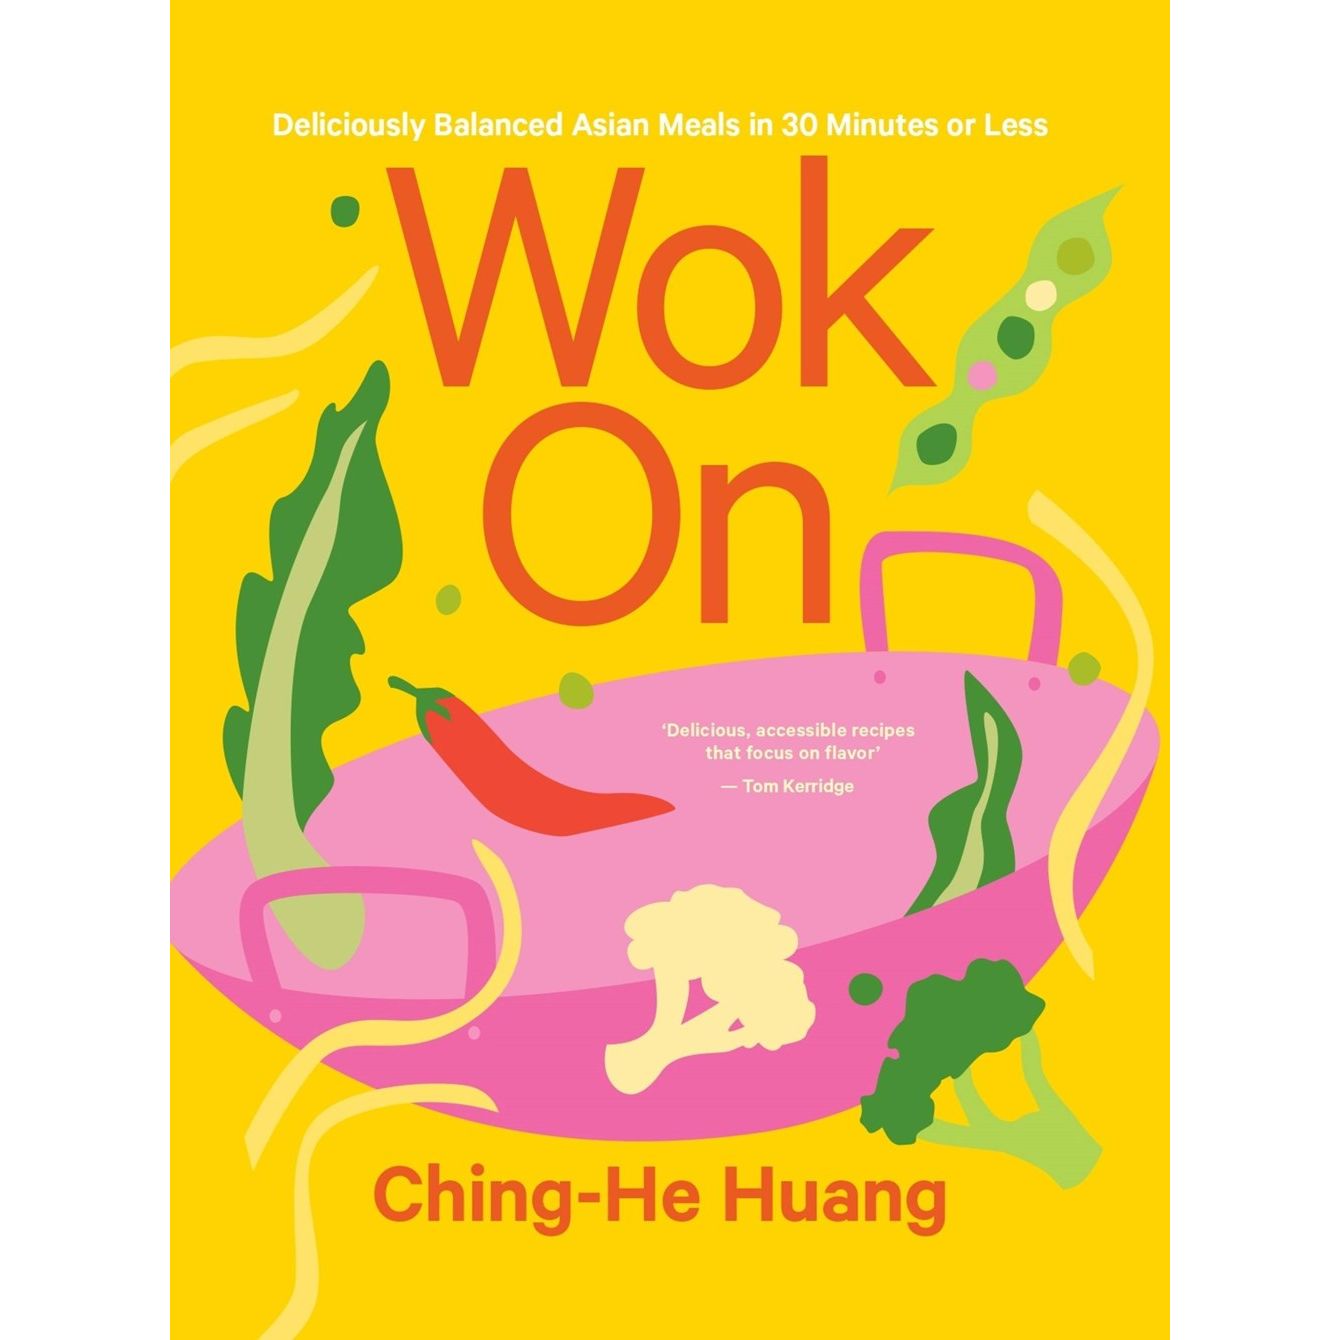 Wok On (Ching-He Huang)